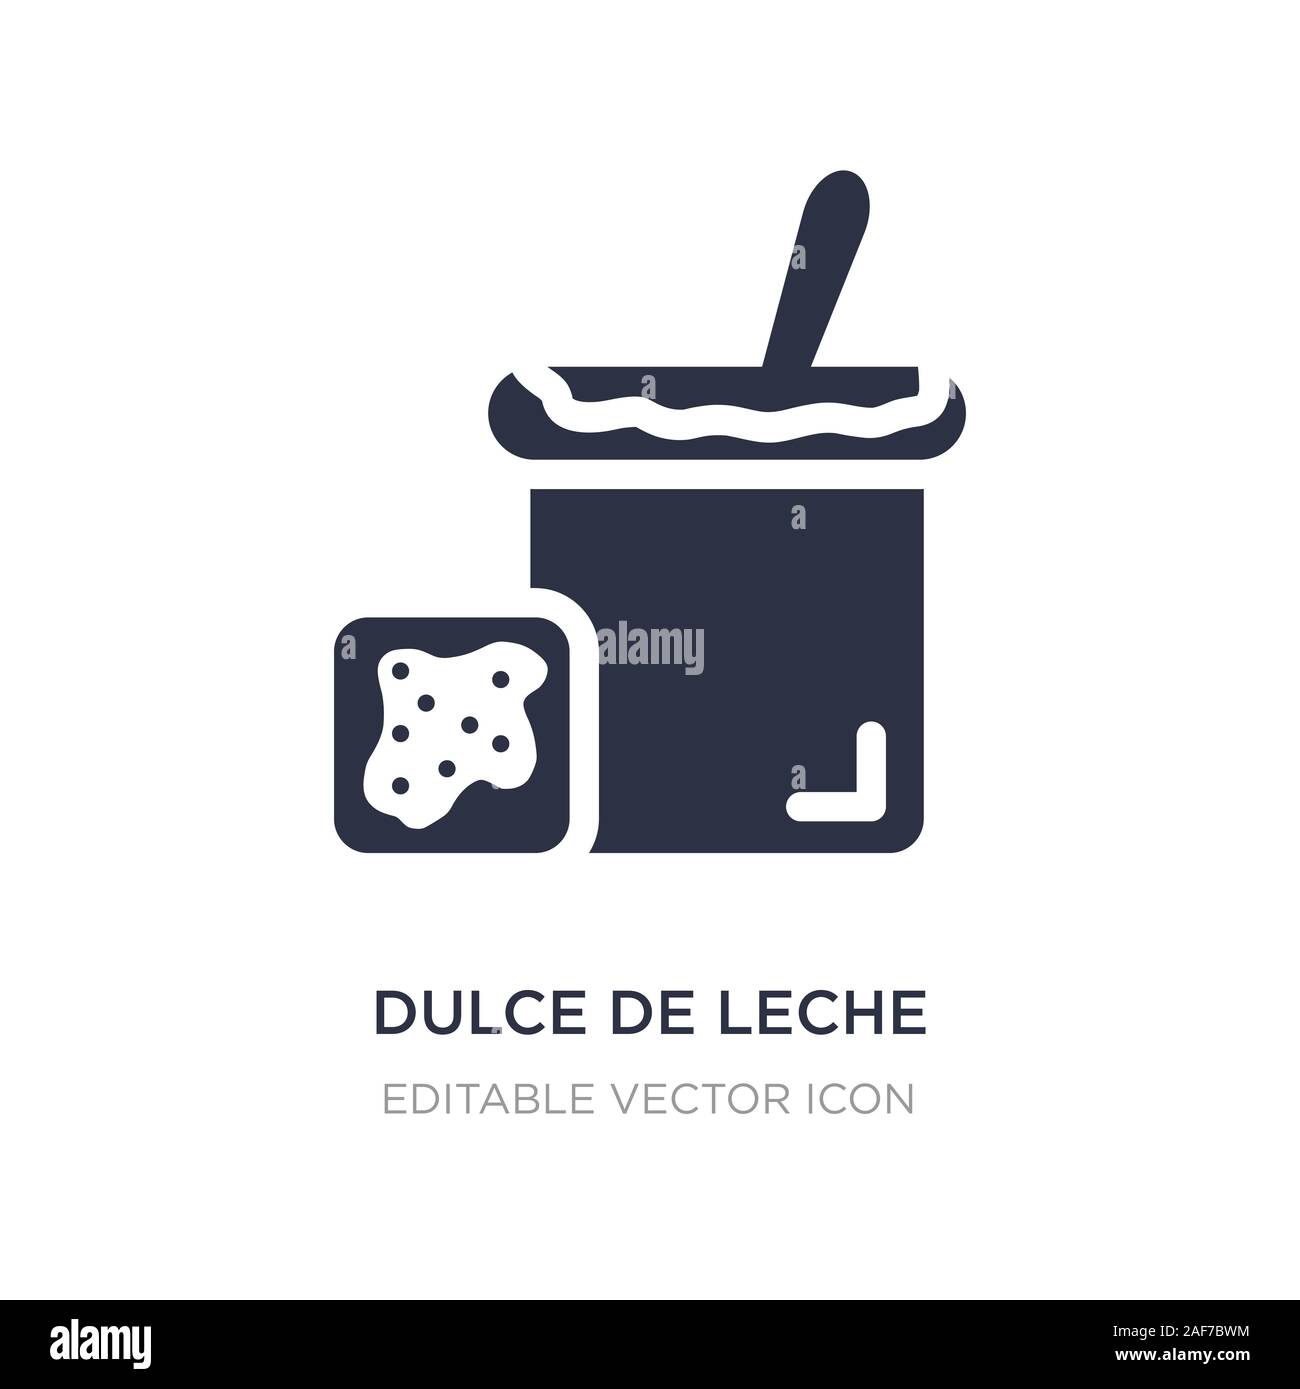 dulce de leche icon on white background. Simple element illustration from Food and restaurant concept. dulce de leche icon symbol design. Stock Vector